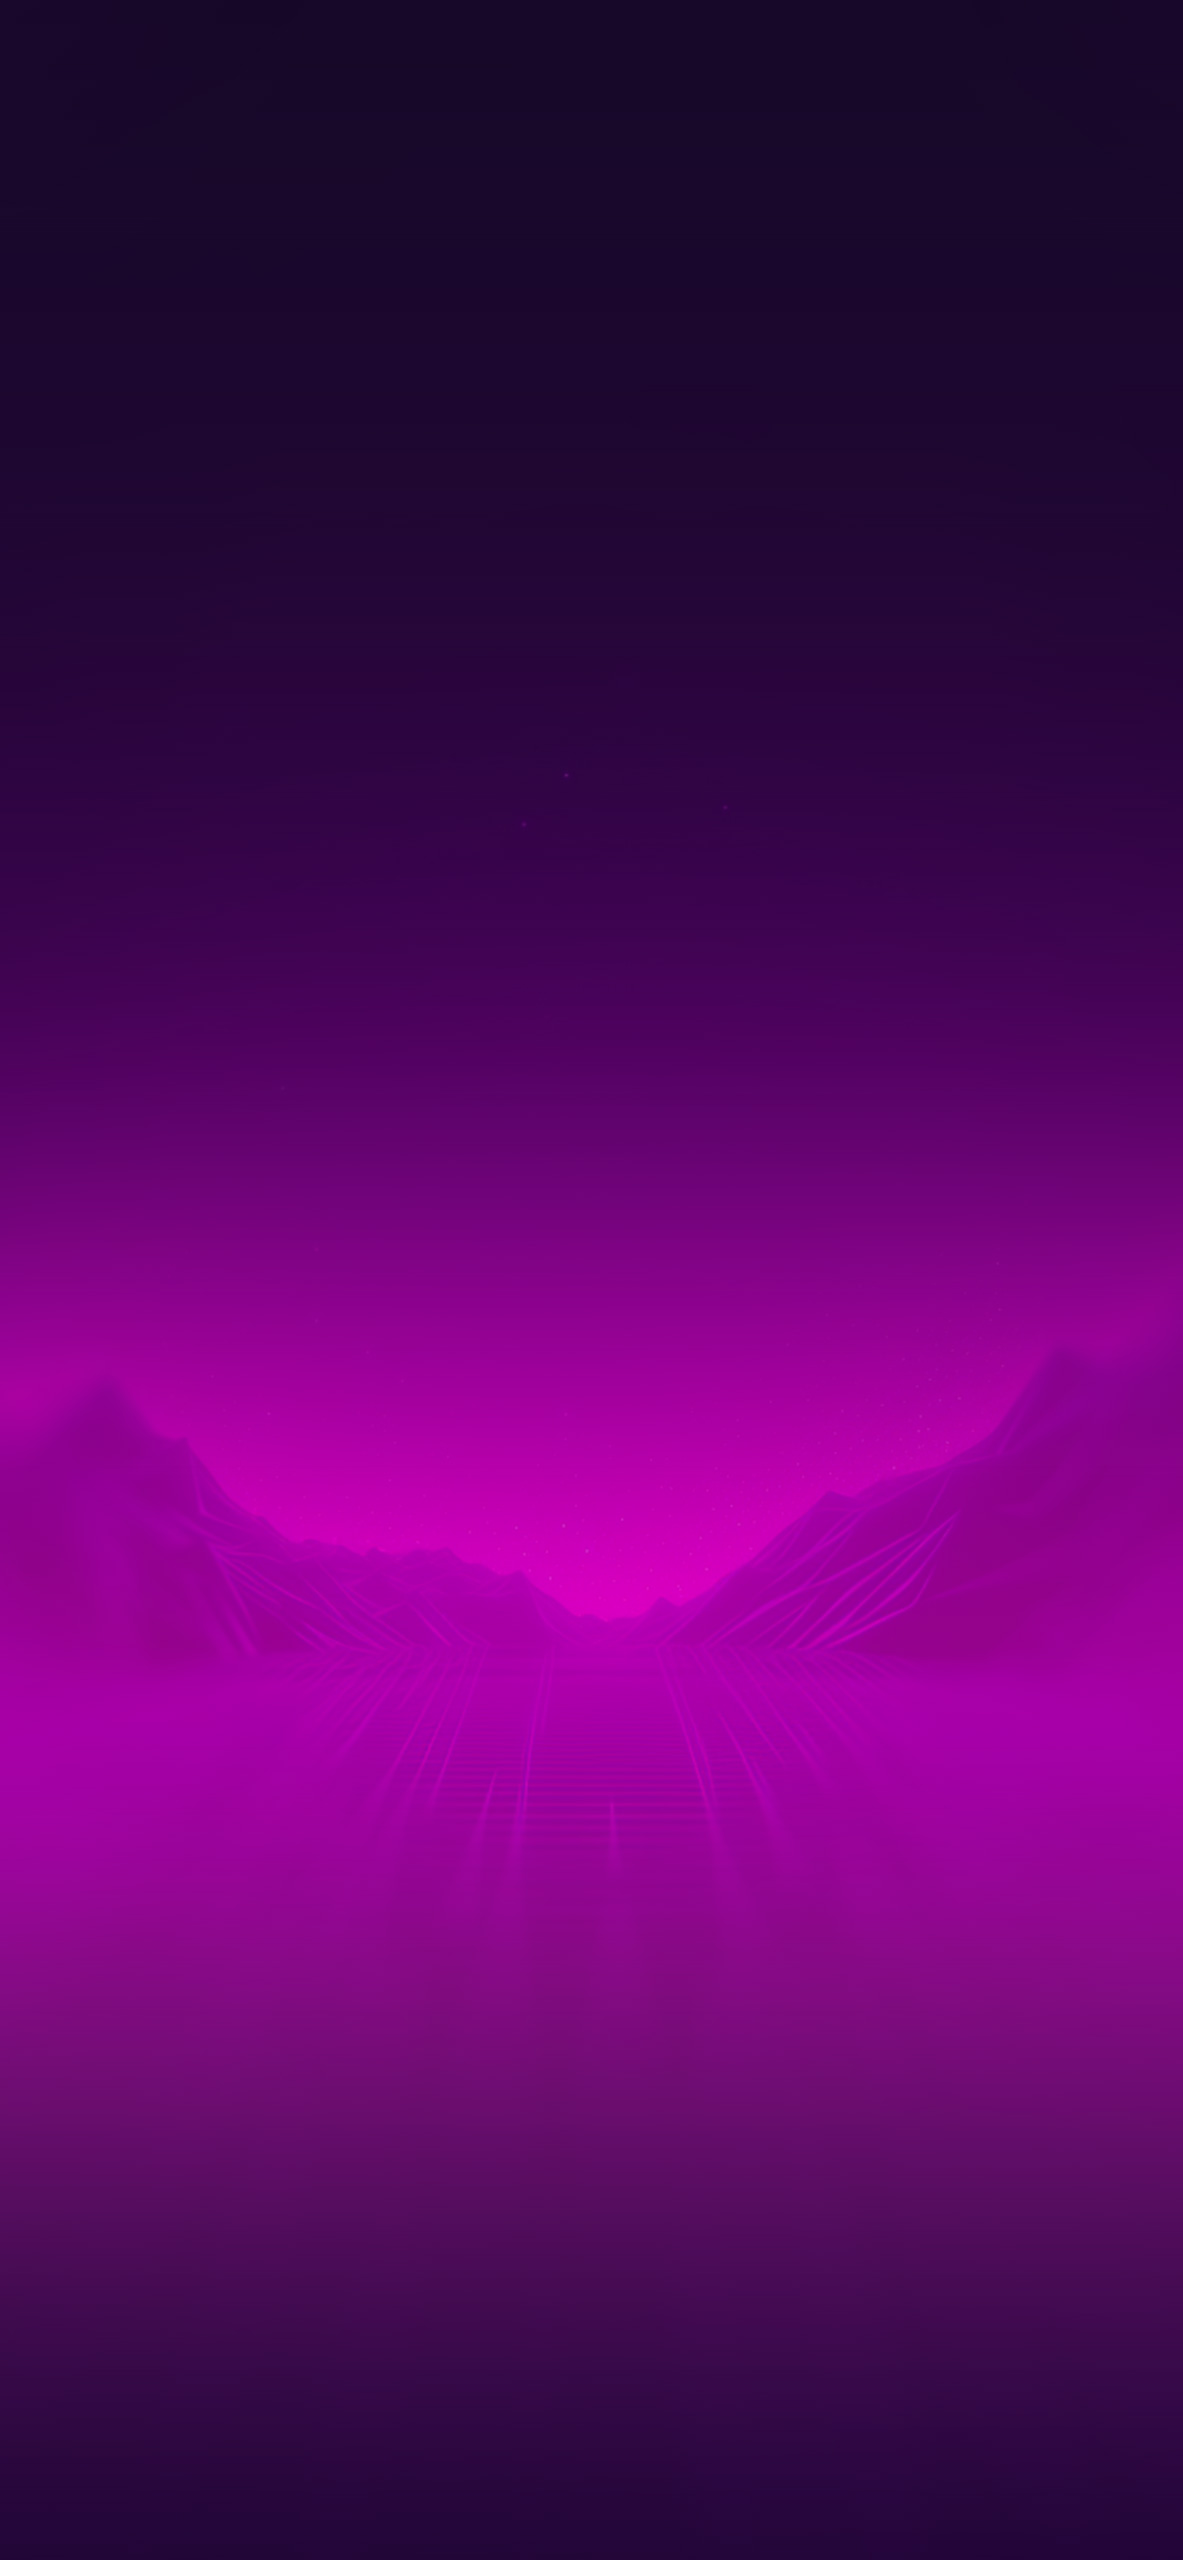 purple retrowave neon grid background